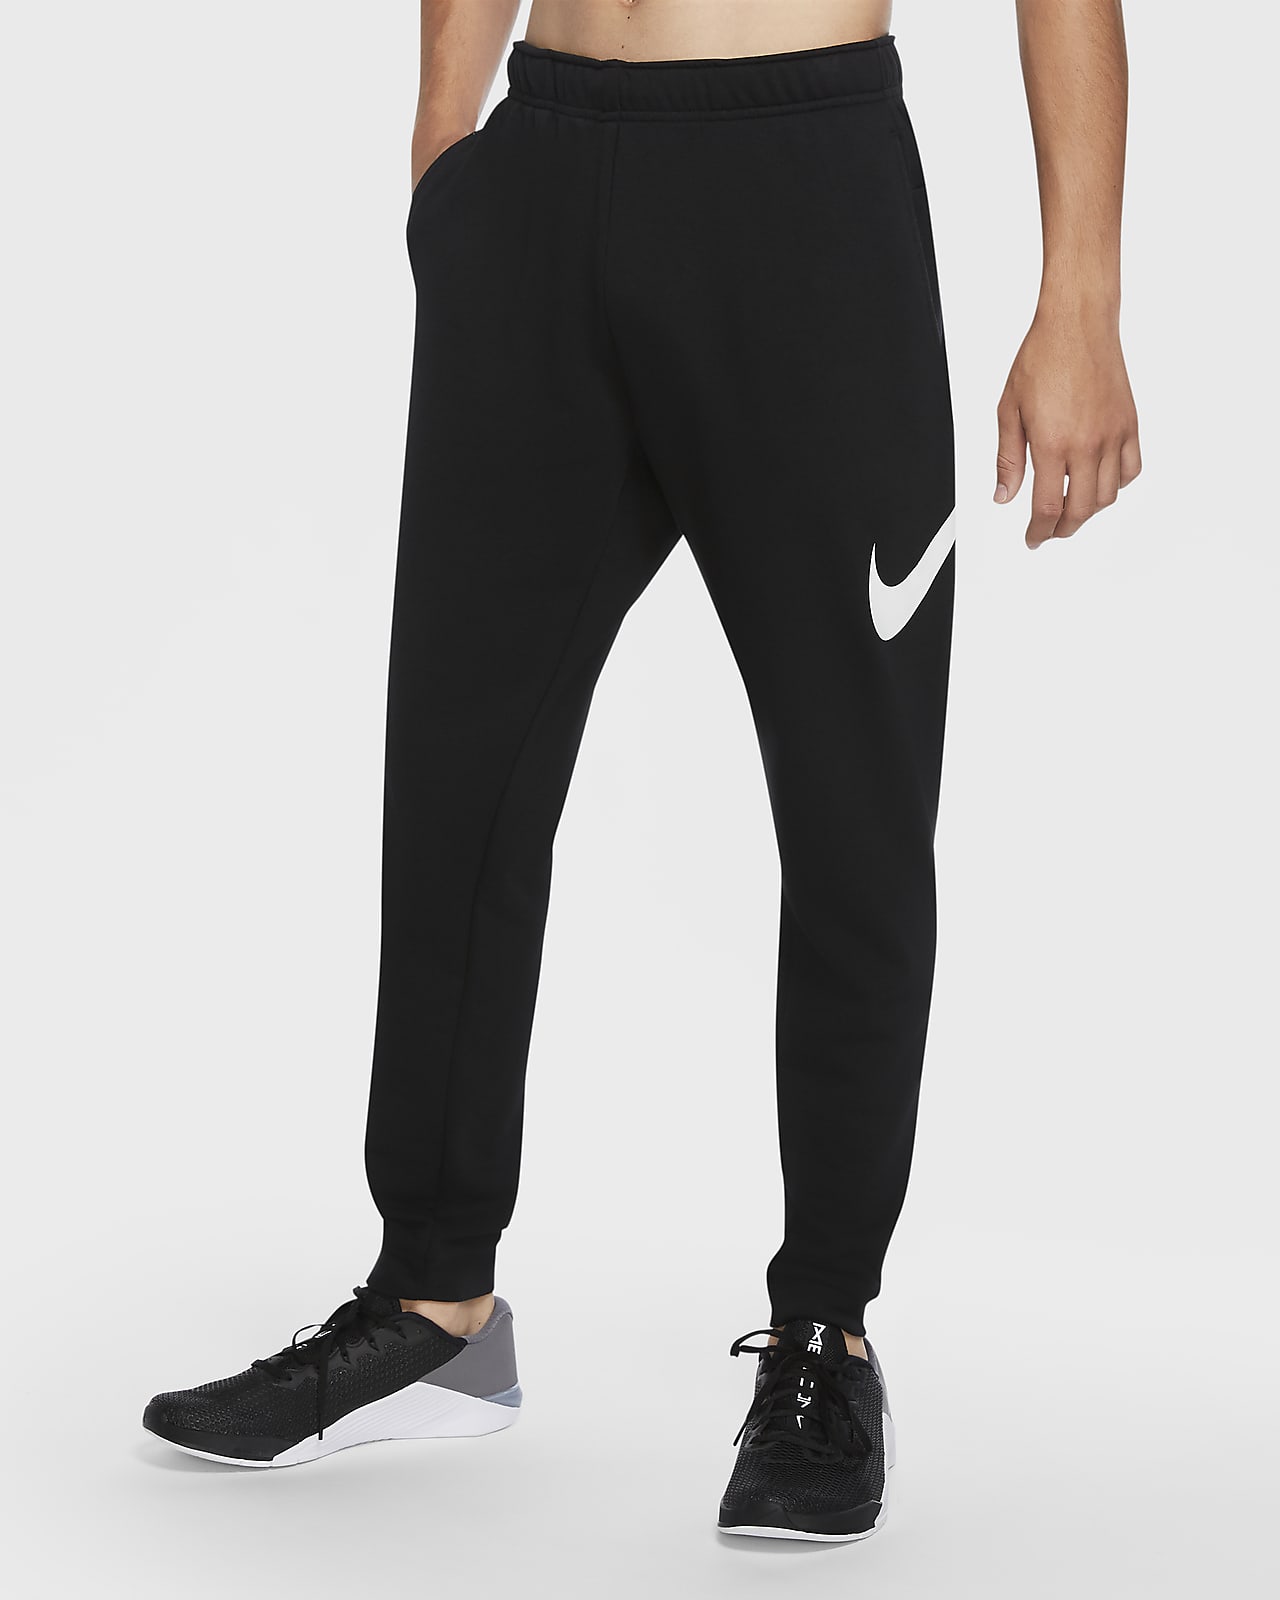 Pantalones de fitness Dri-FIT entallados para Nike Dry Nike MX